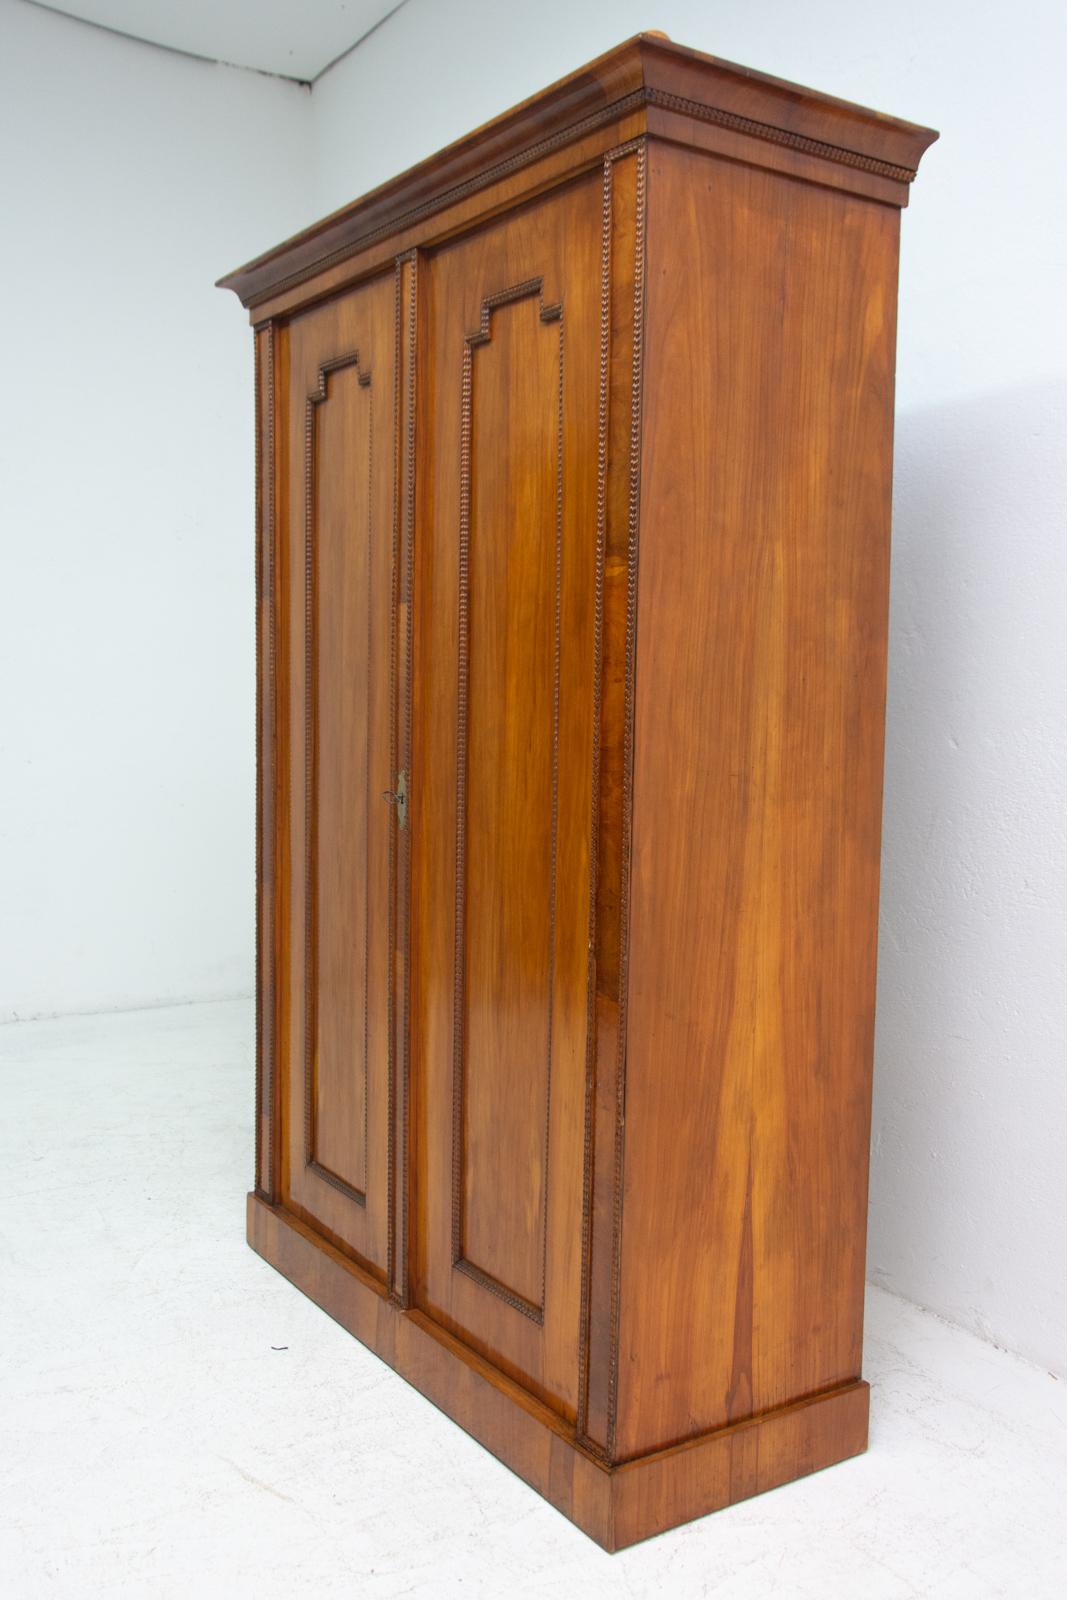 Wood Antique Biedermeier Shelf Cabinet-Wardrobe, 1830s, Austria-Hungary For Sale